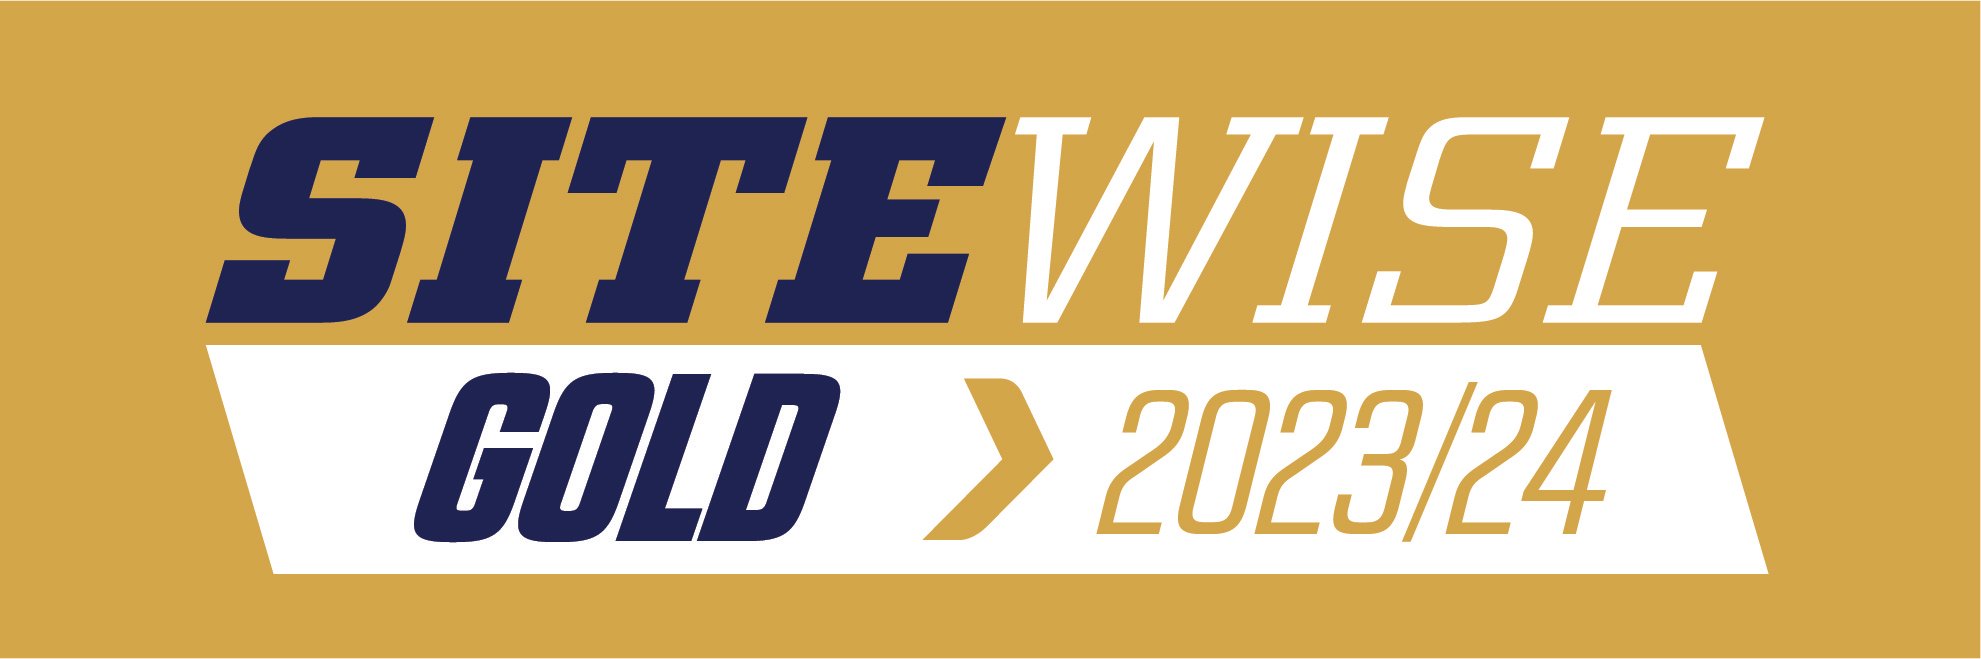 SiteWise-Gold logo.jpg